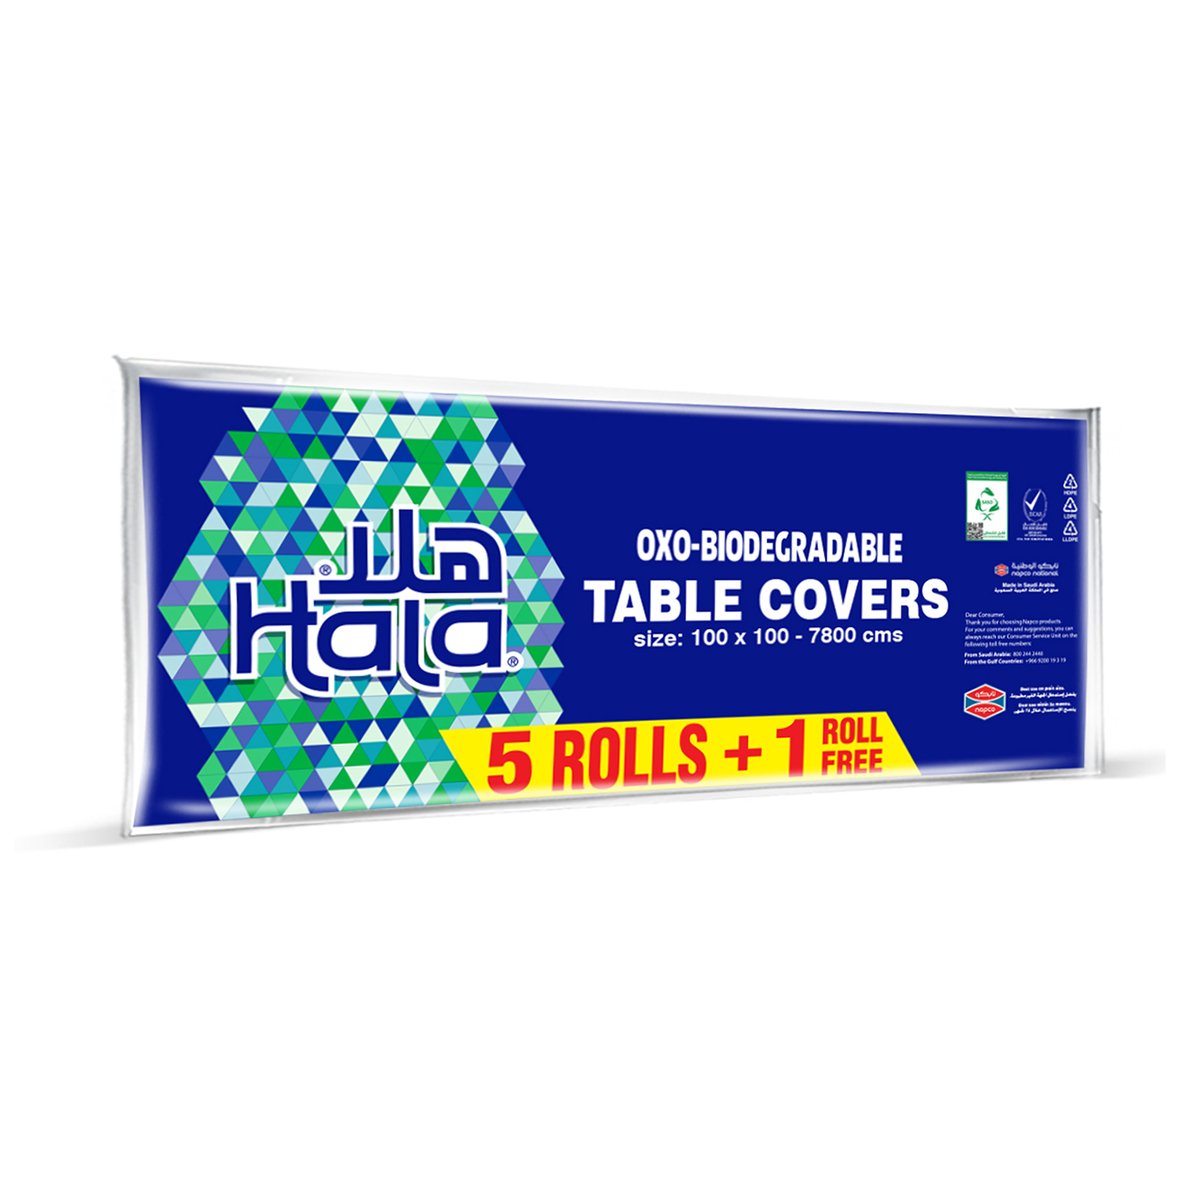 Hala Table Covers Oxo-Biodegradable Size 100 x 100 -7800cms 13pcs 5+1